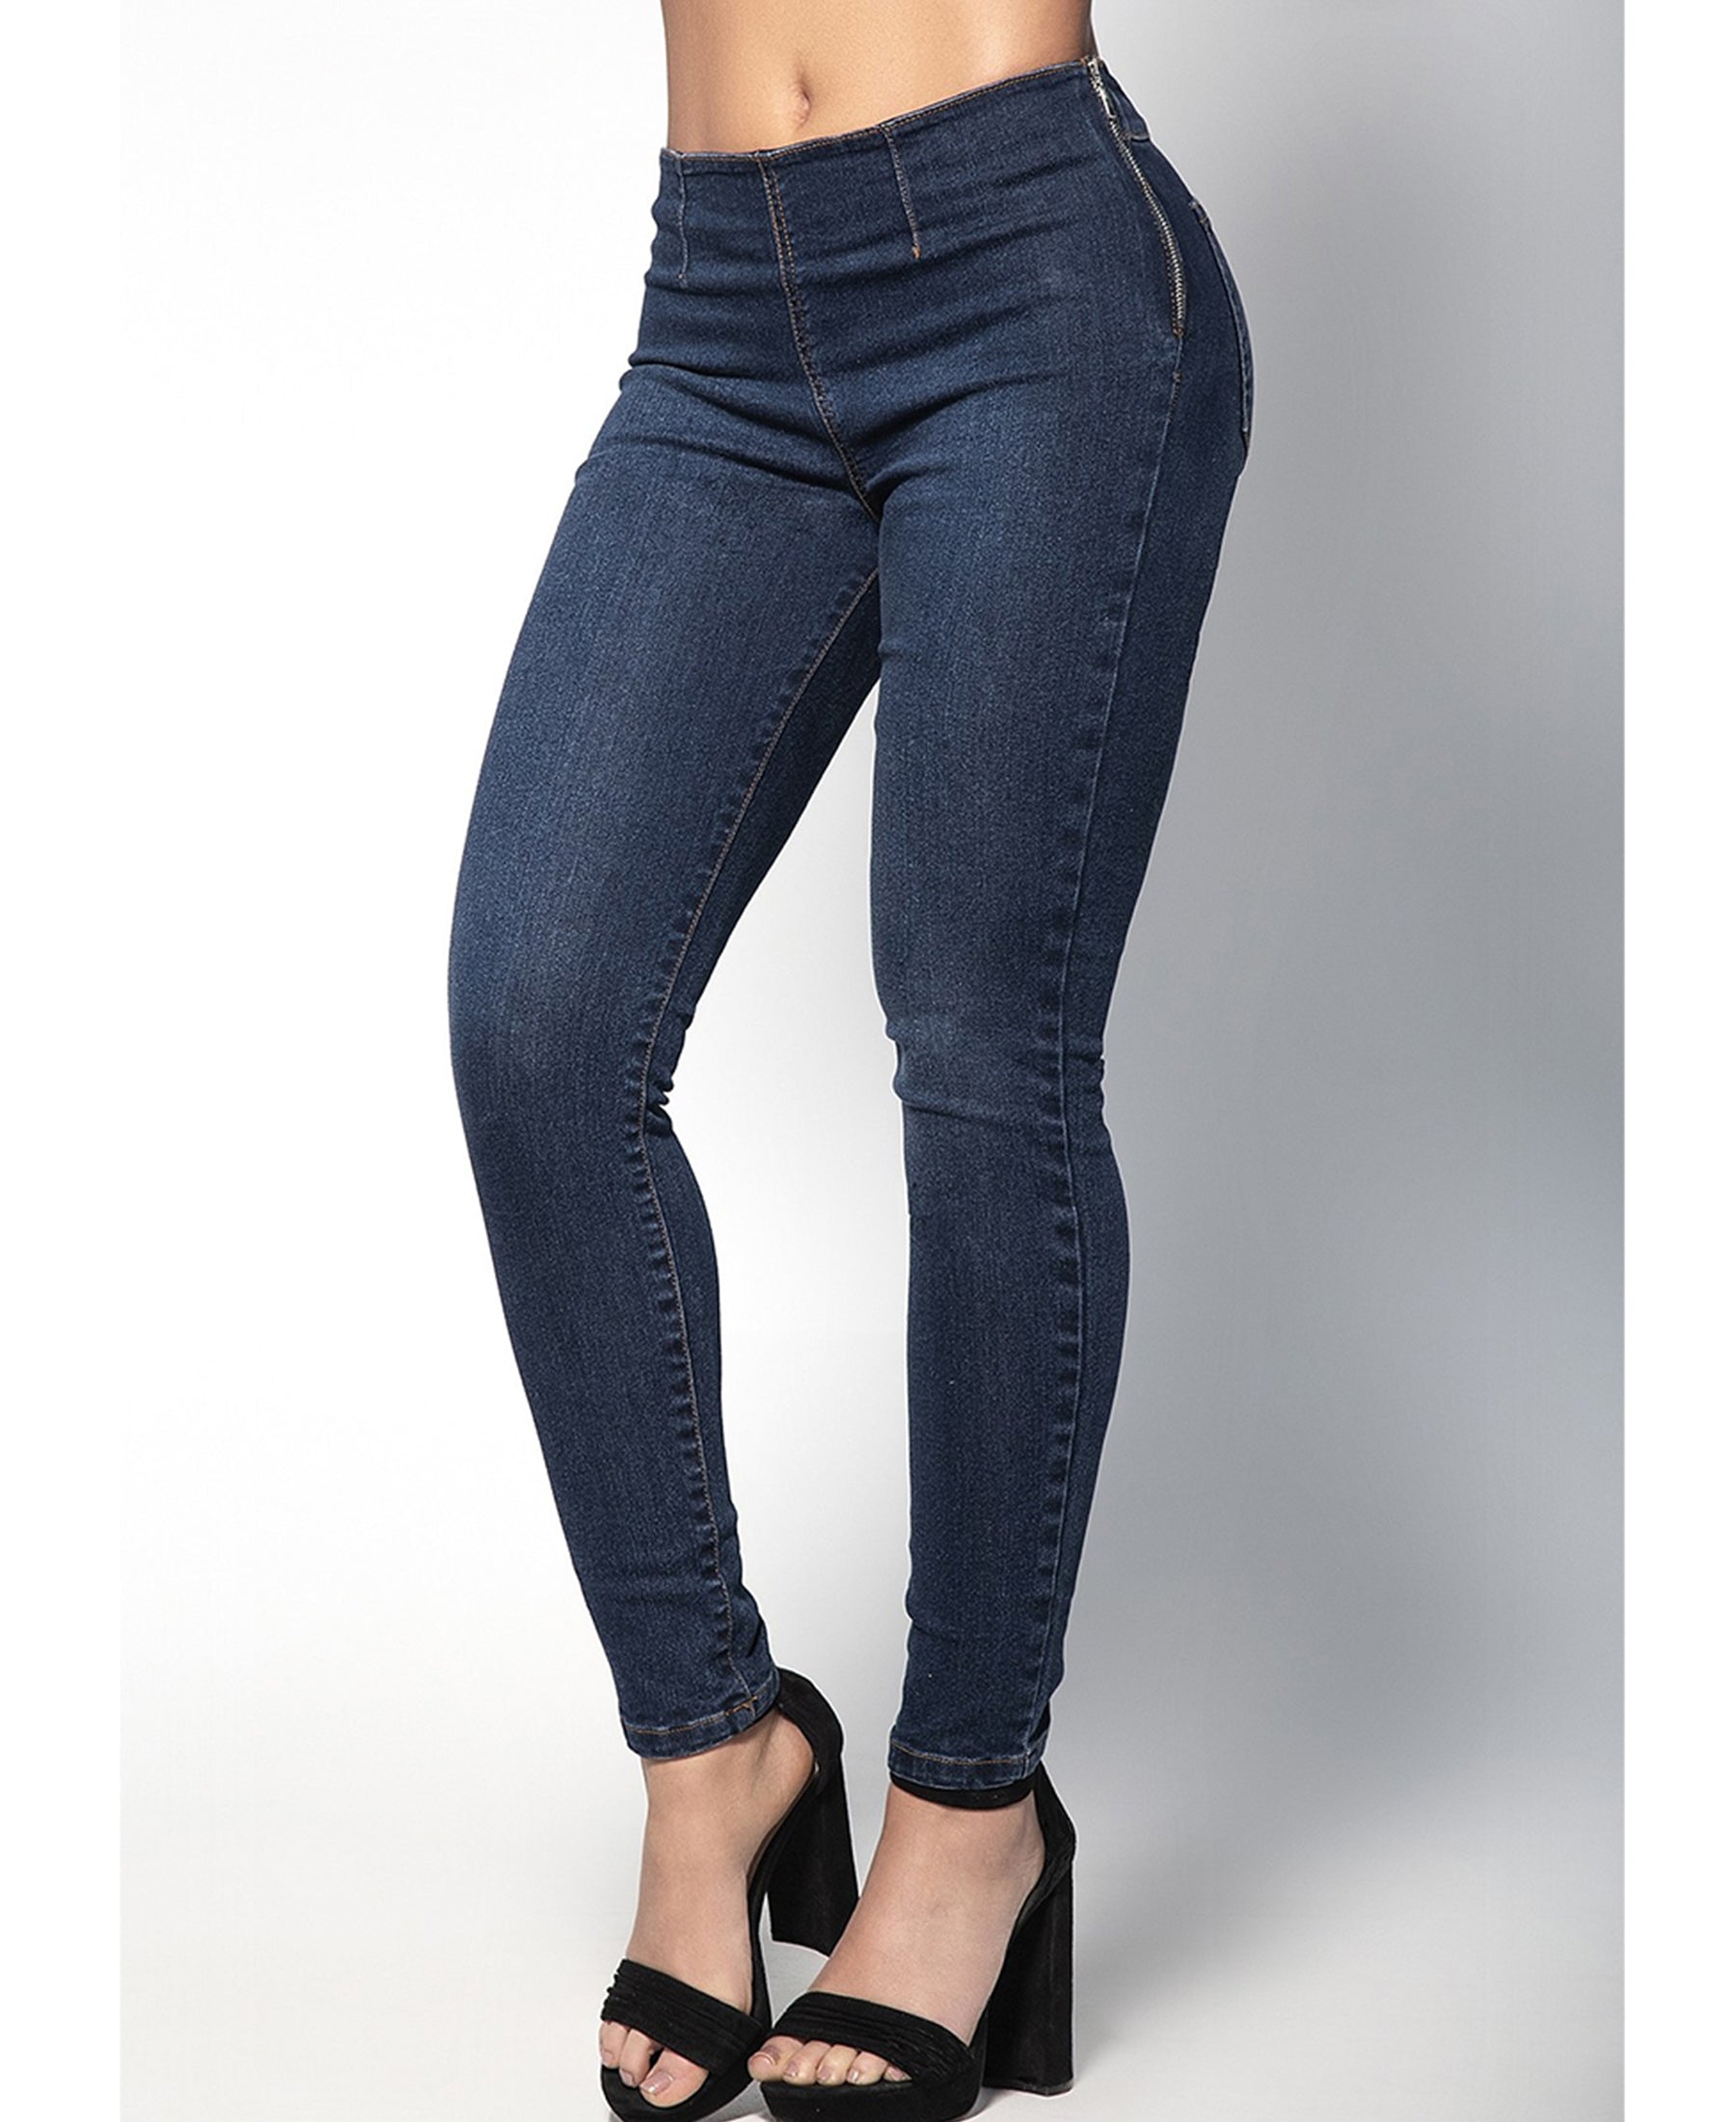 D1914 Jeans w/Side Zipper front view